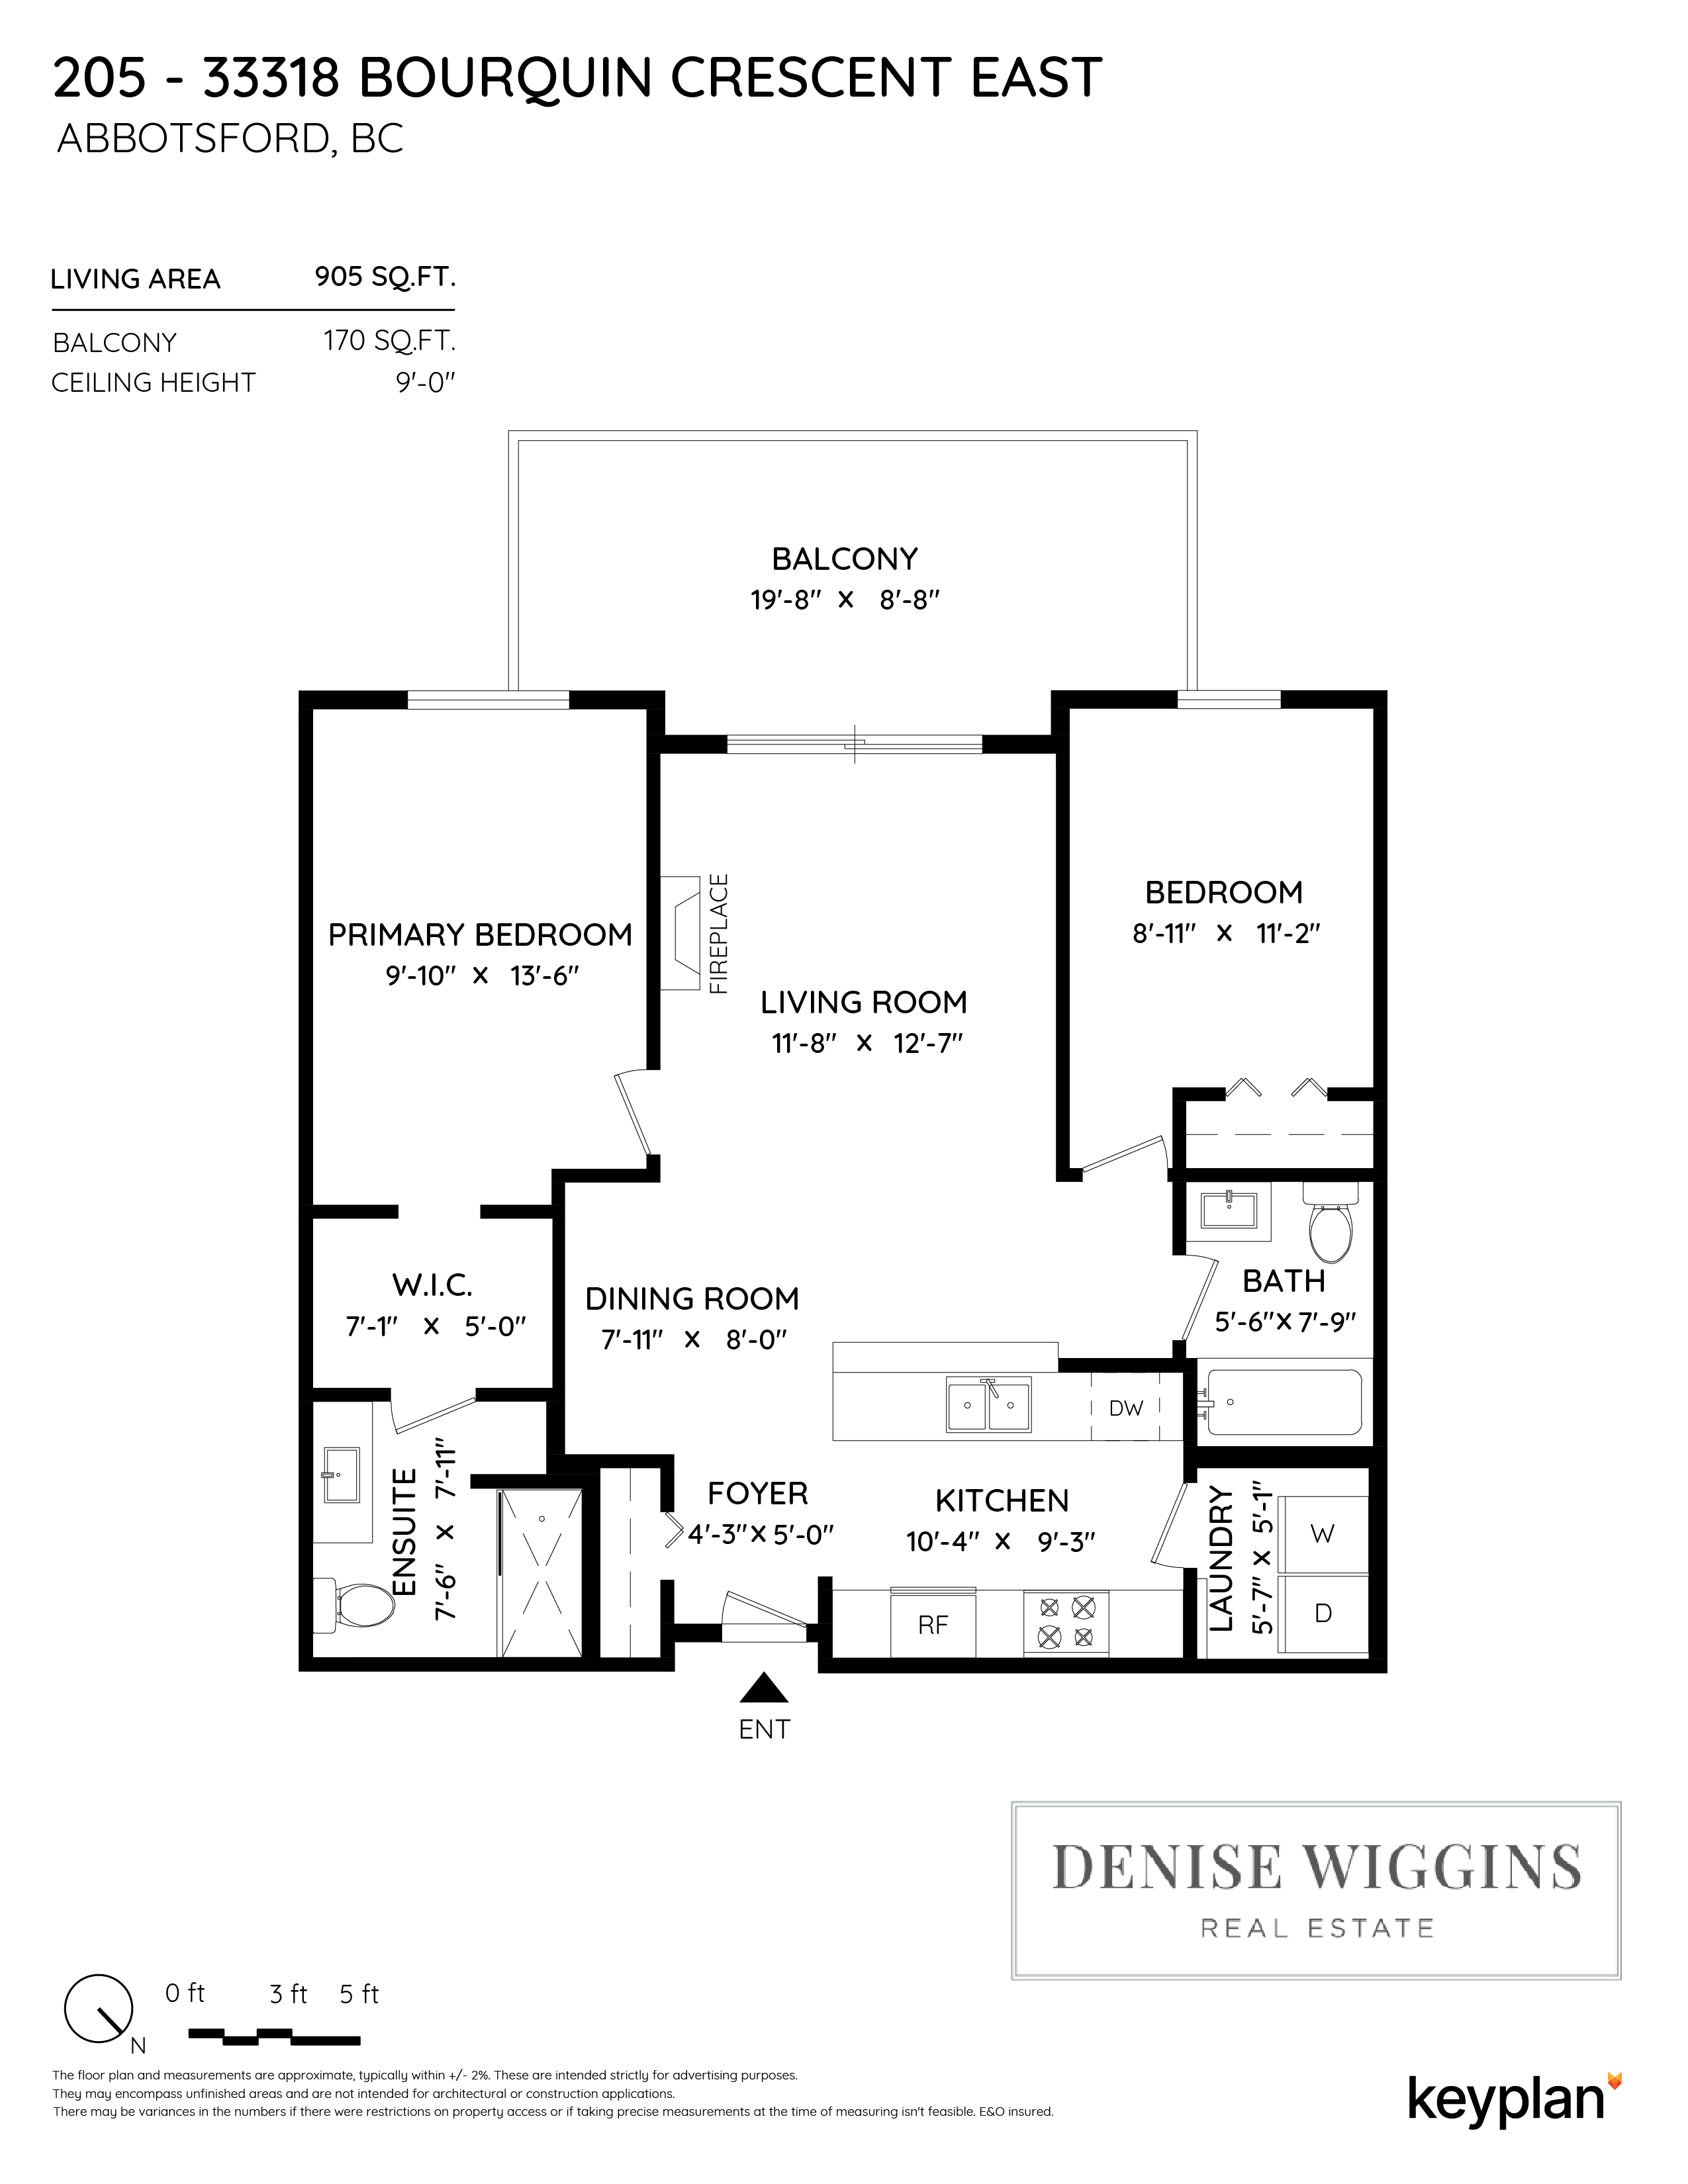 Denise Wiggins - Unit 205 - 33318 Bourquin Crescent East, Abbotsford, BC, Canada | Floor Plan 1